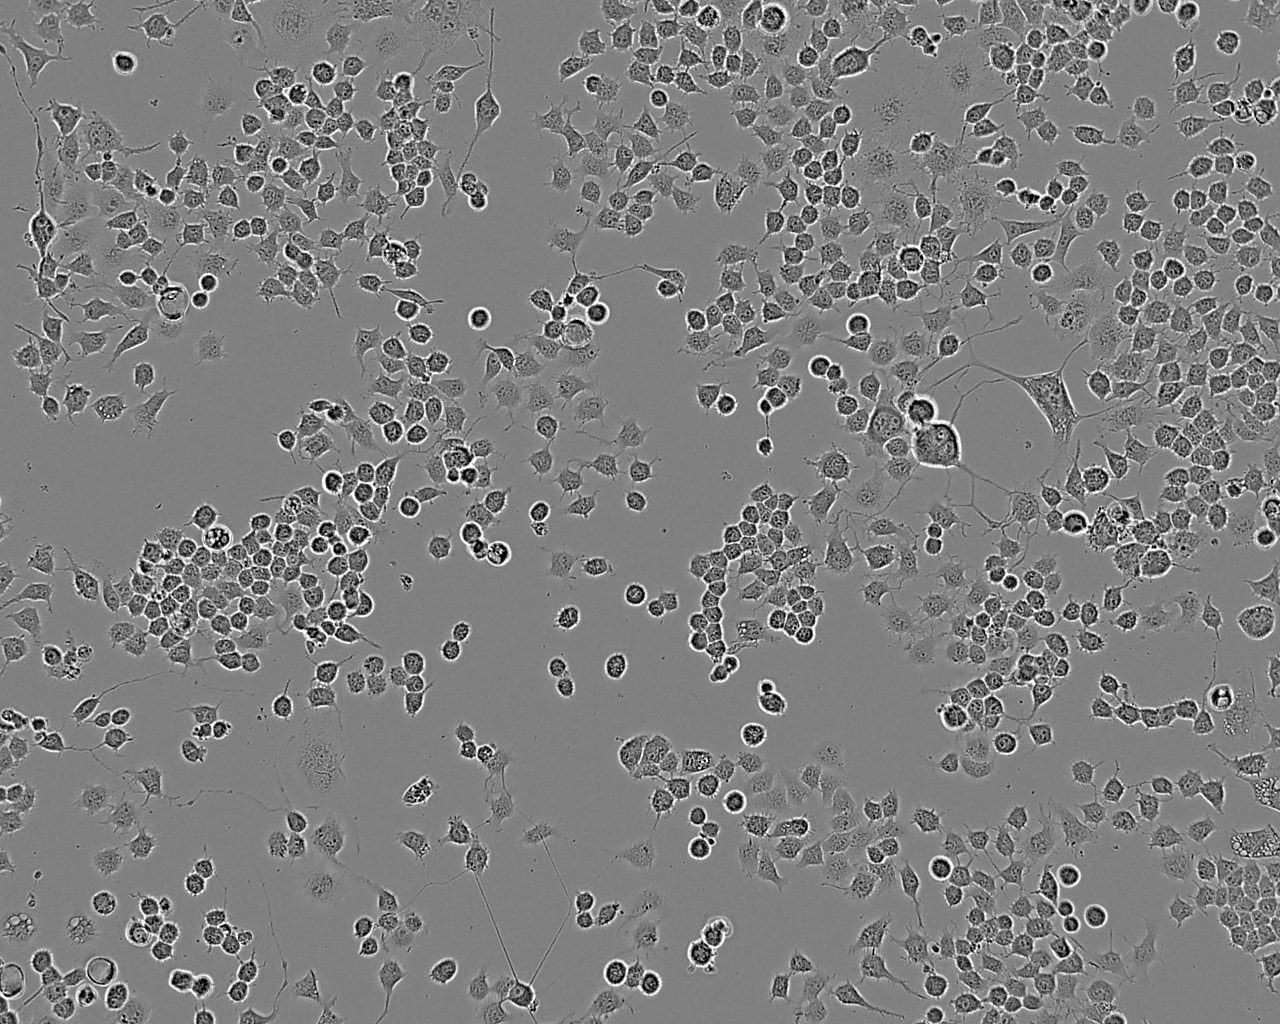 MBT-2 epithelioid cells小鼠膀胱癌细胞系